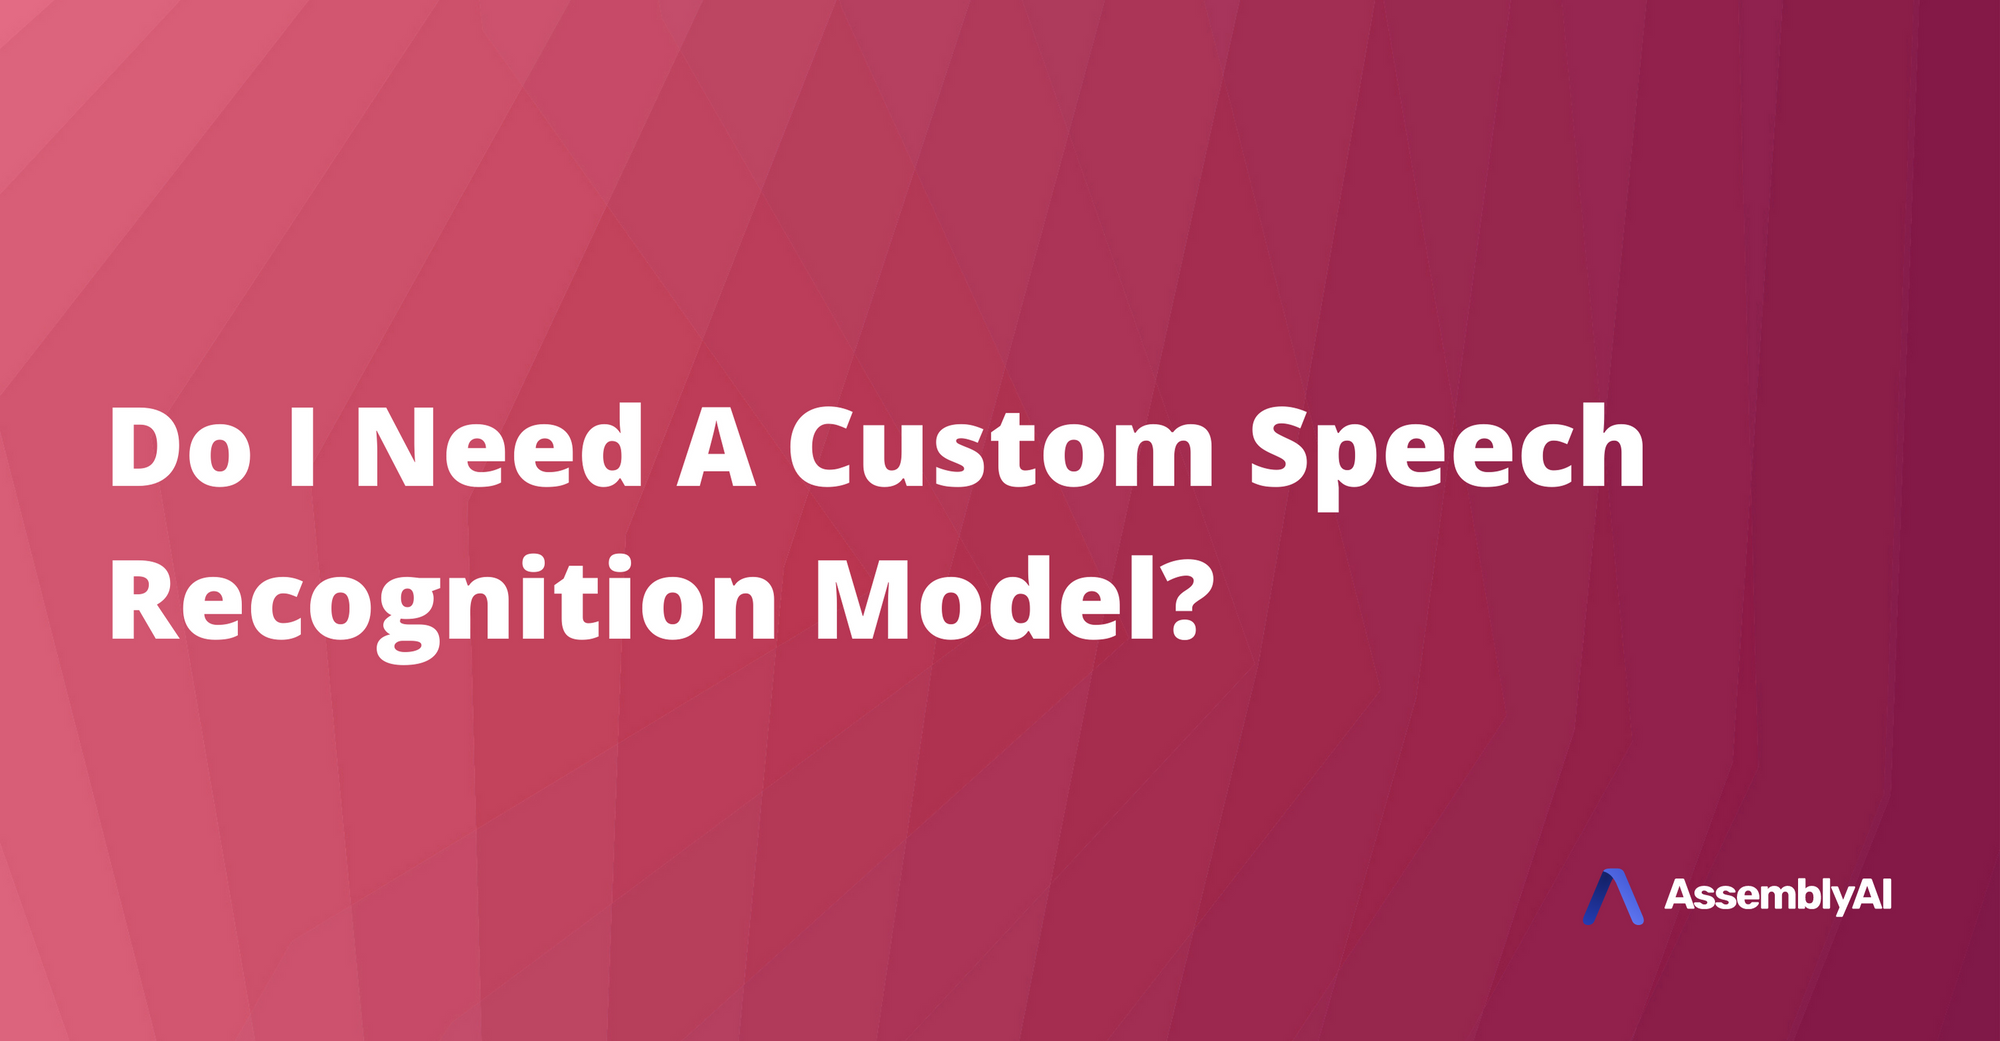 Do I Need A Custom Speech Recognition Model?